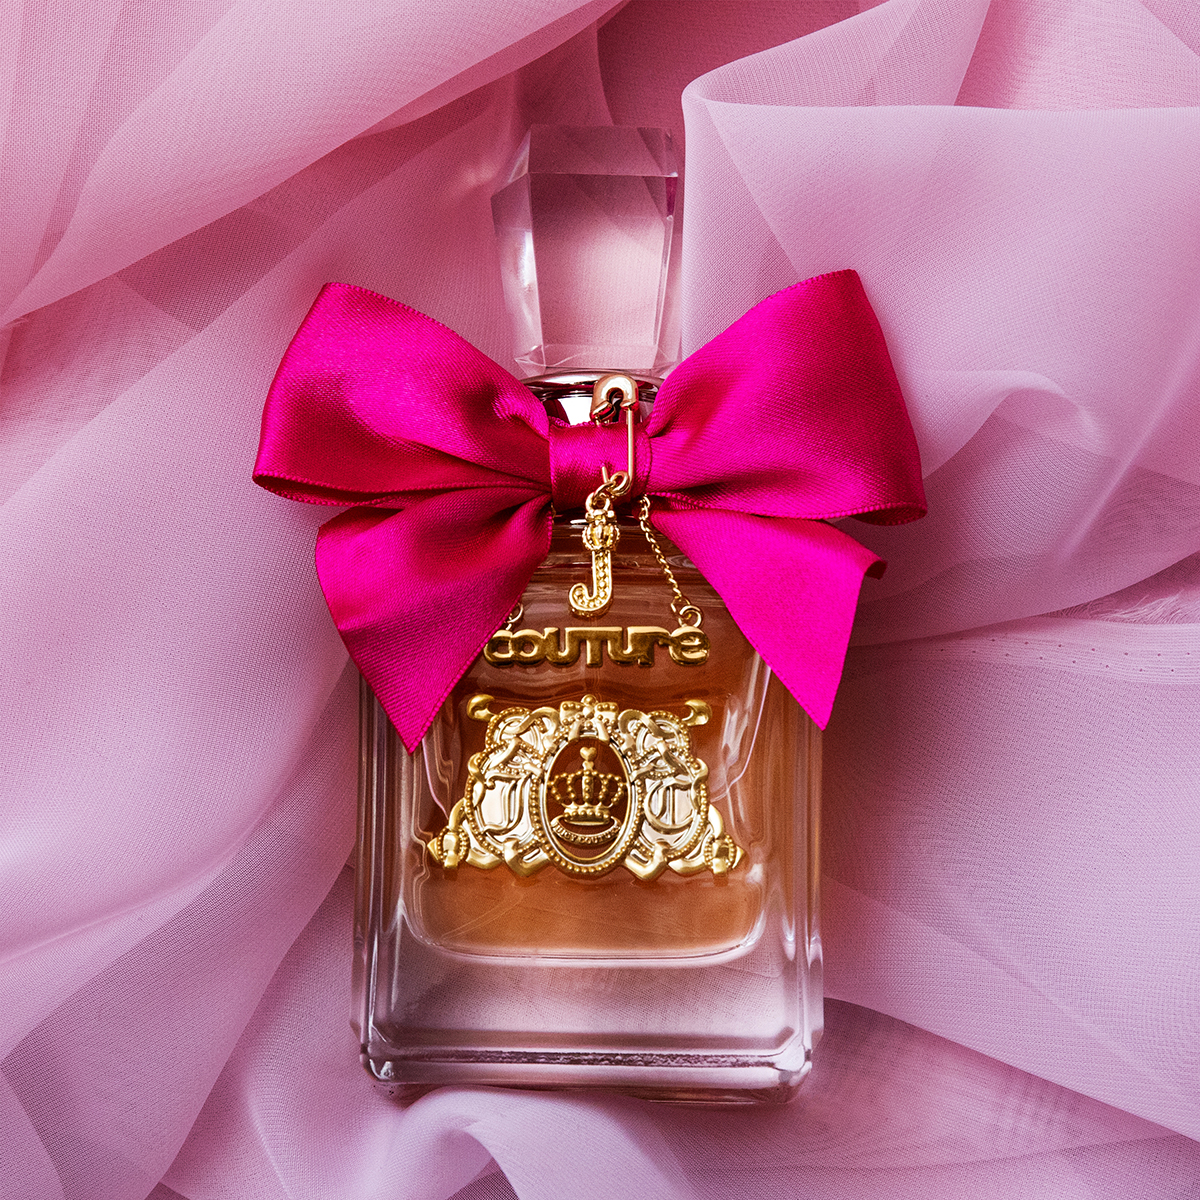 Juicy Couture Viva La Juicy 3pc. Perfume Gift Set